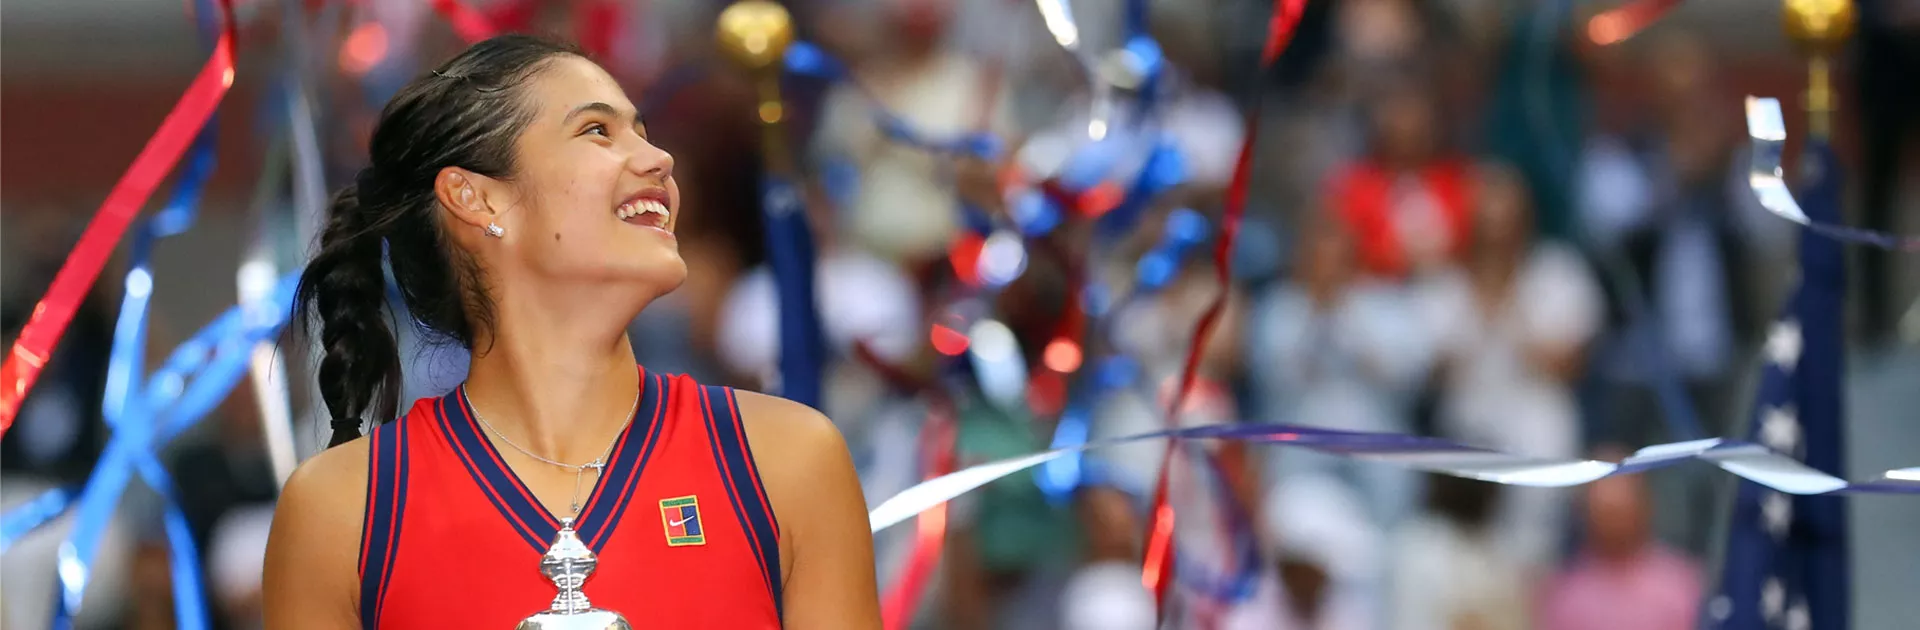 Emma Raducanu celebrates with trophy win at US Open